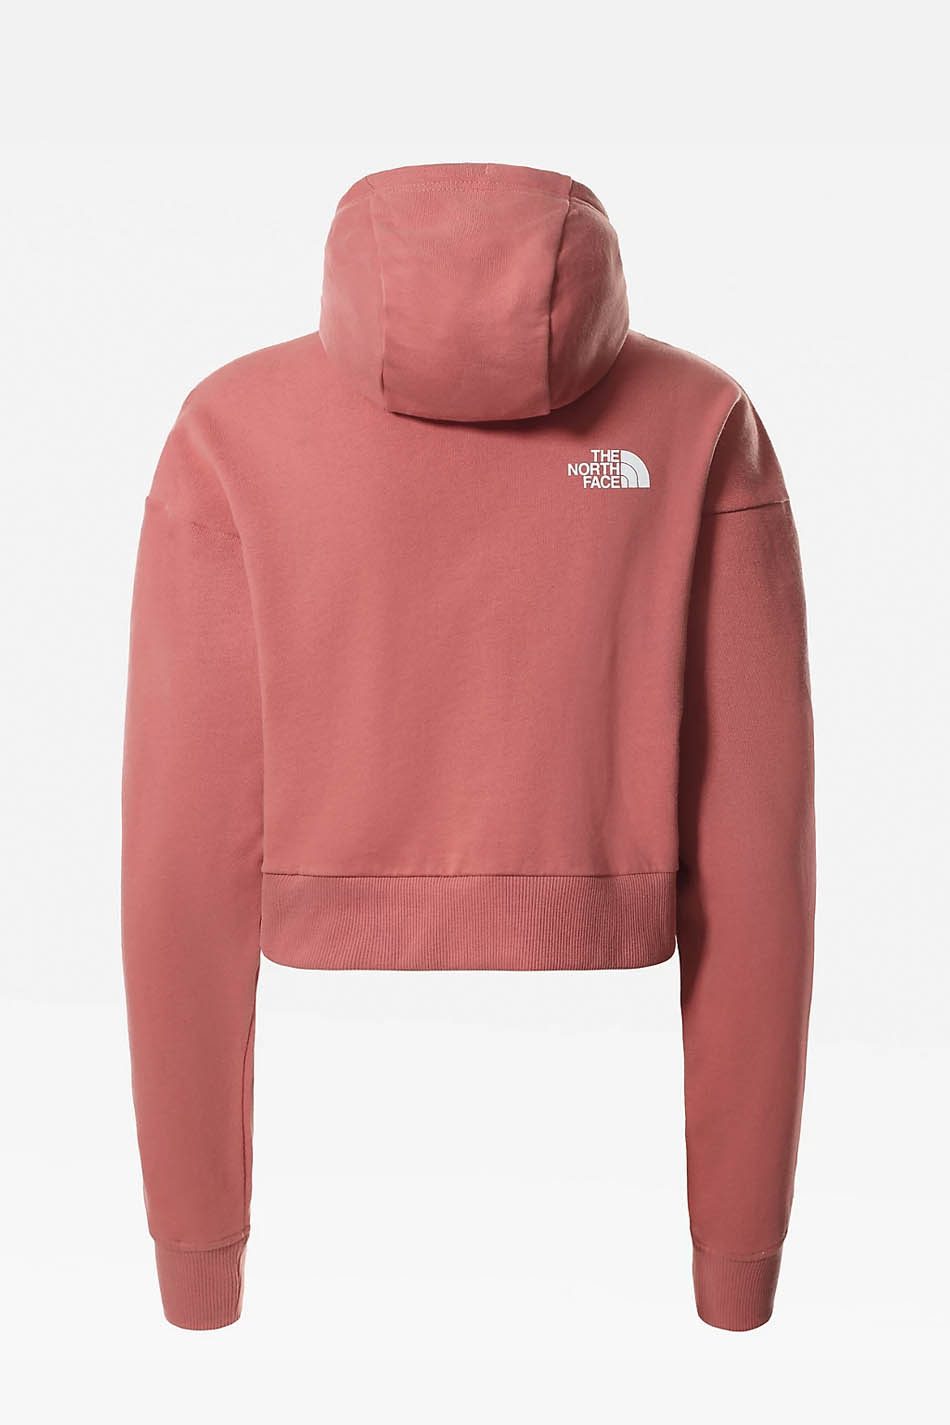 The North Face Trend Cropped Fleece Sweatshirt